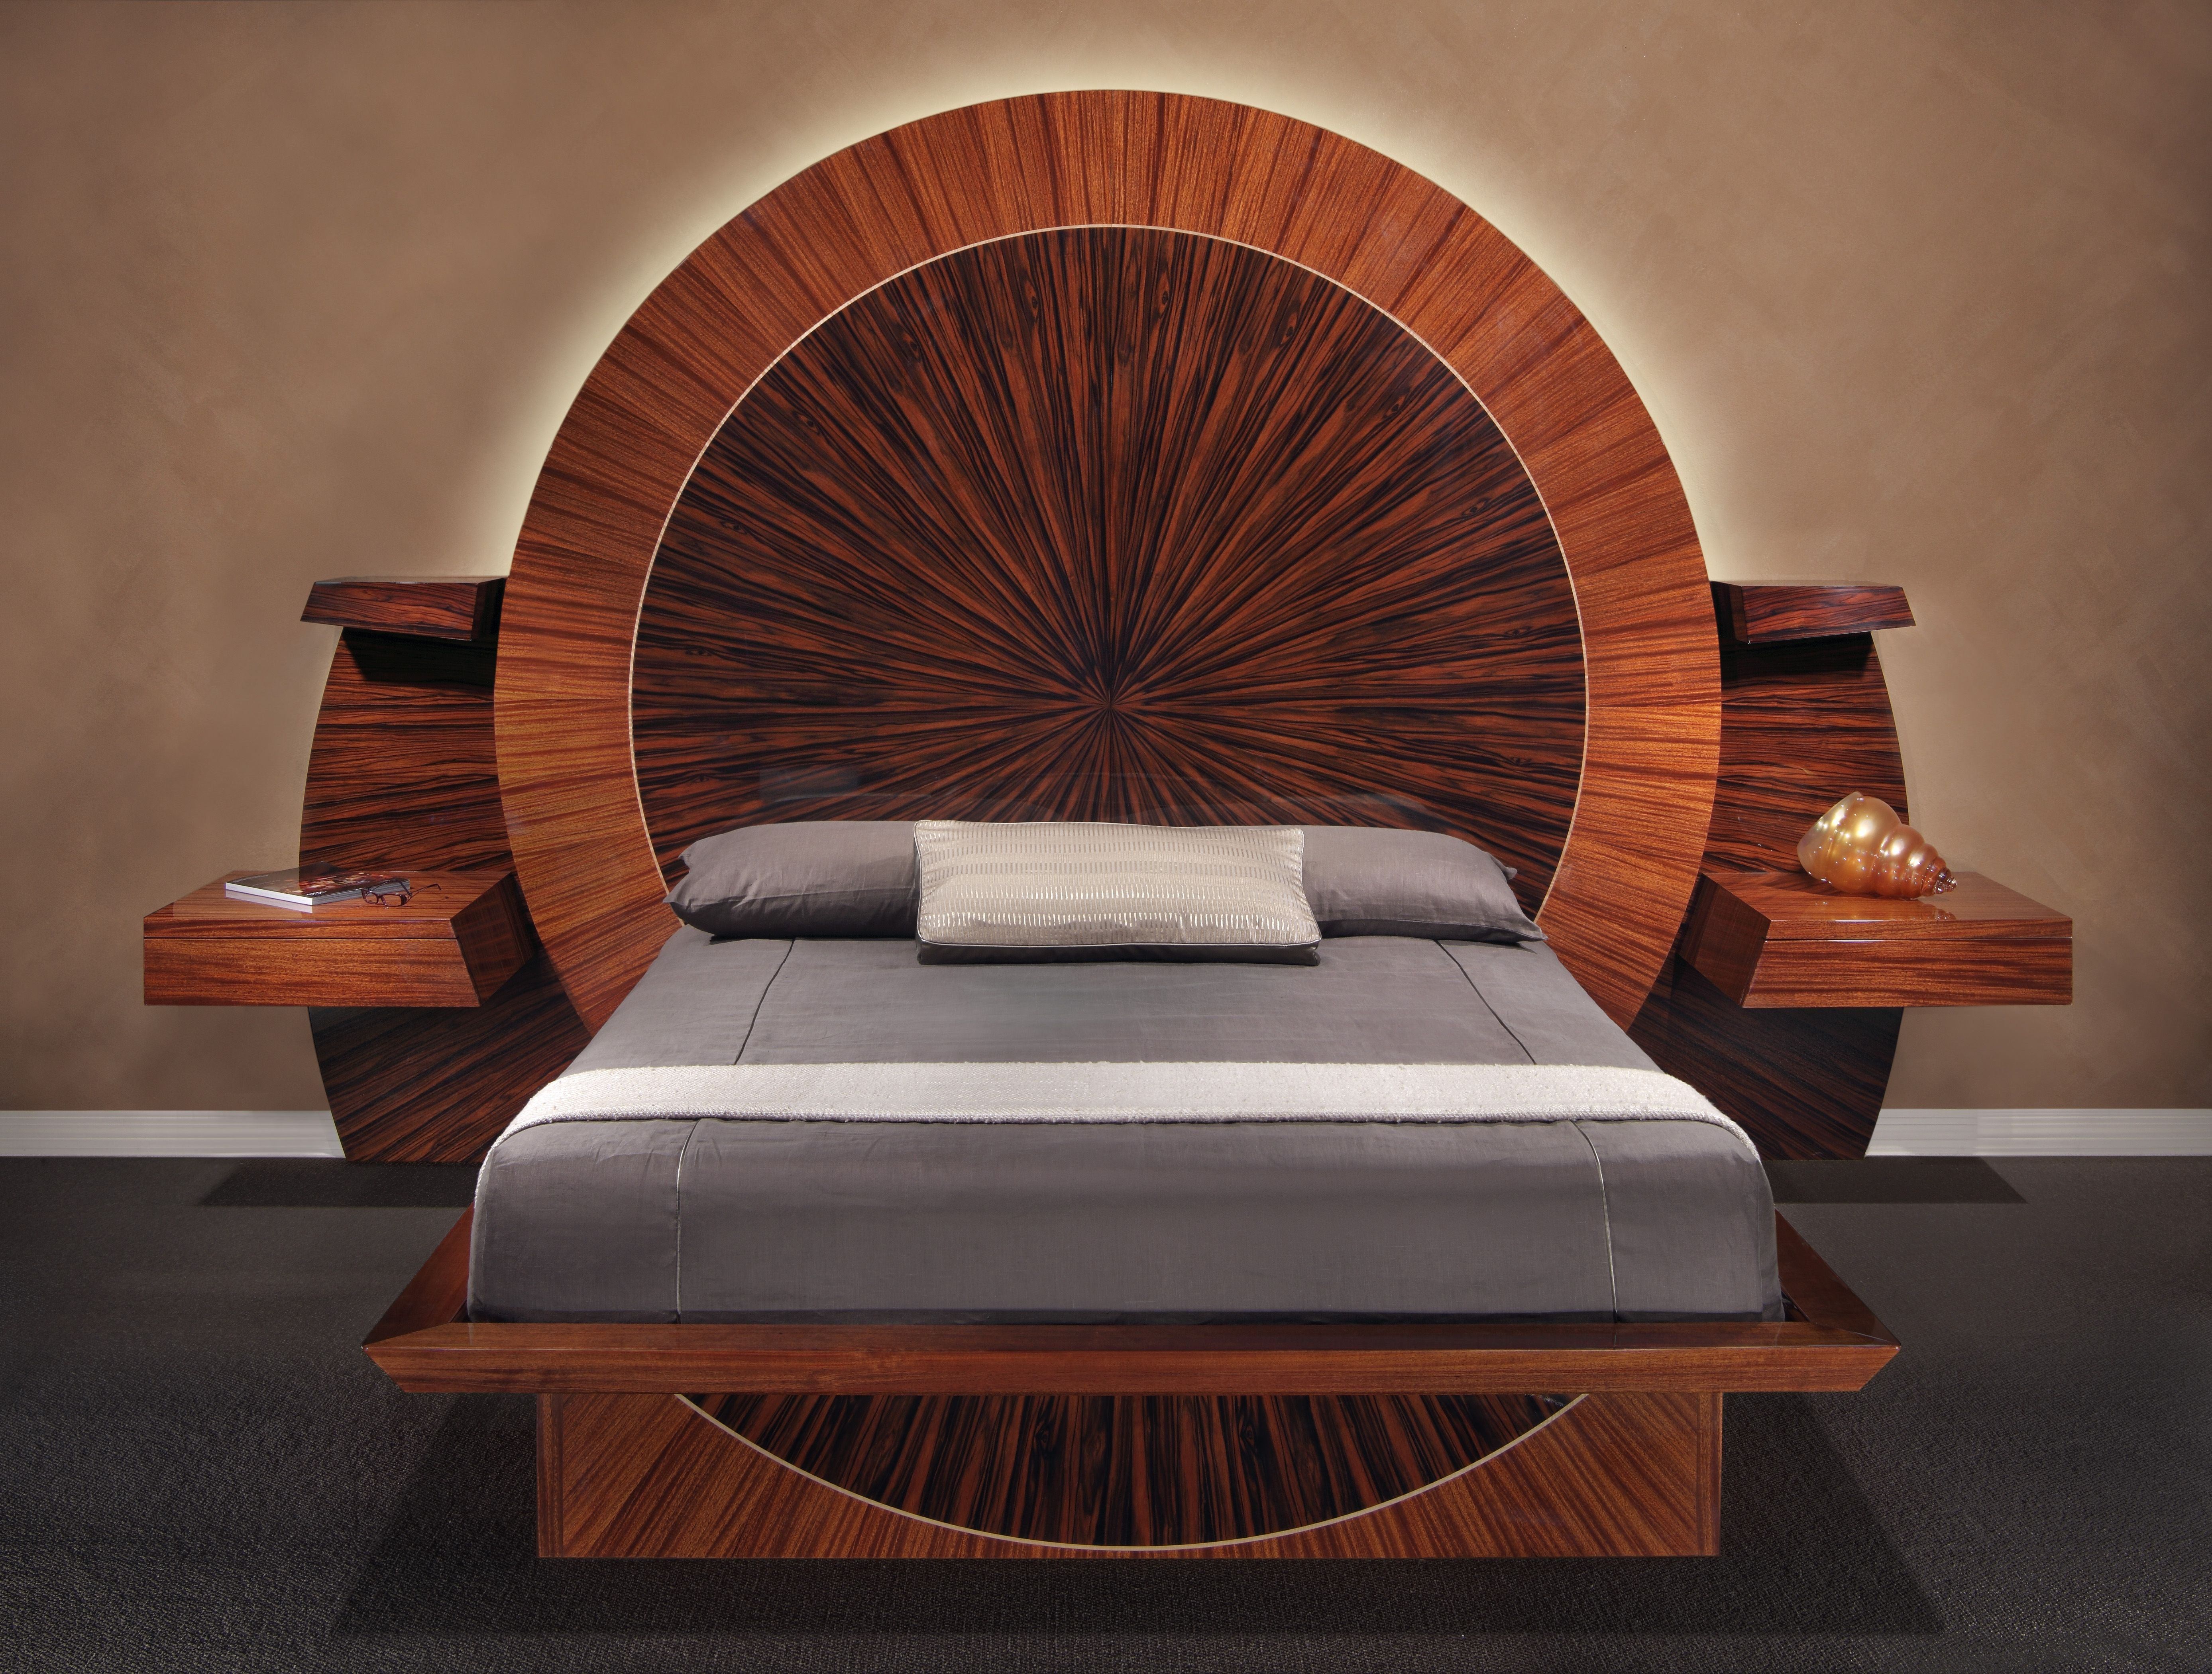 Необычные кровати. Необычные дизайнерские кровати. Необычные деревянные кровати. Необычные кровати двуспальные. Нестандартные кровати